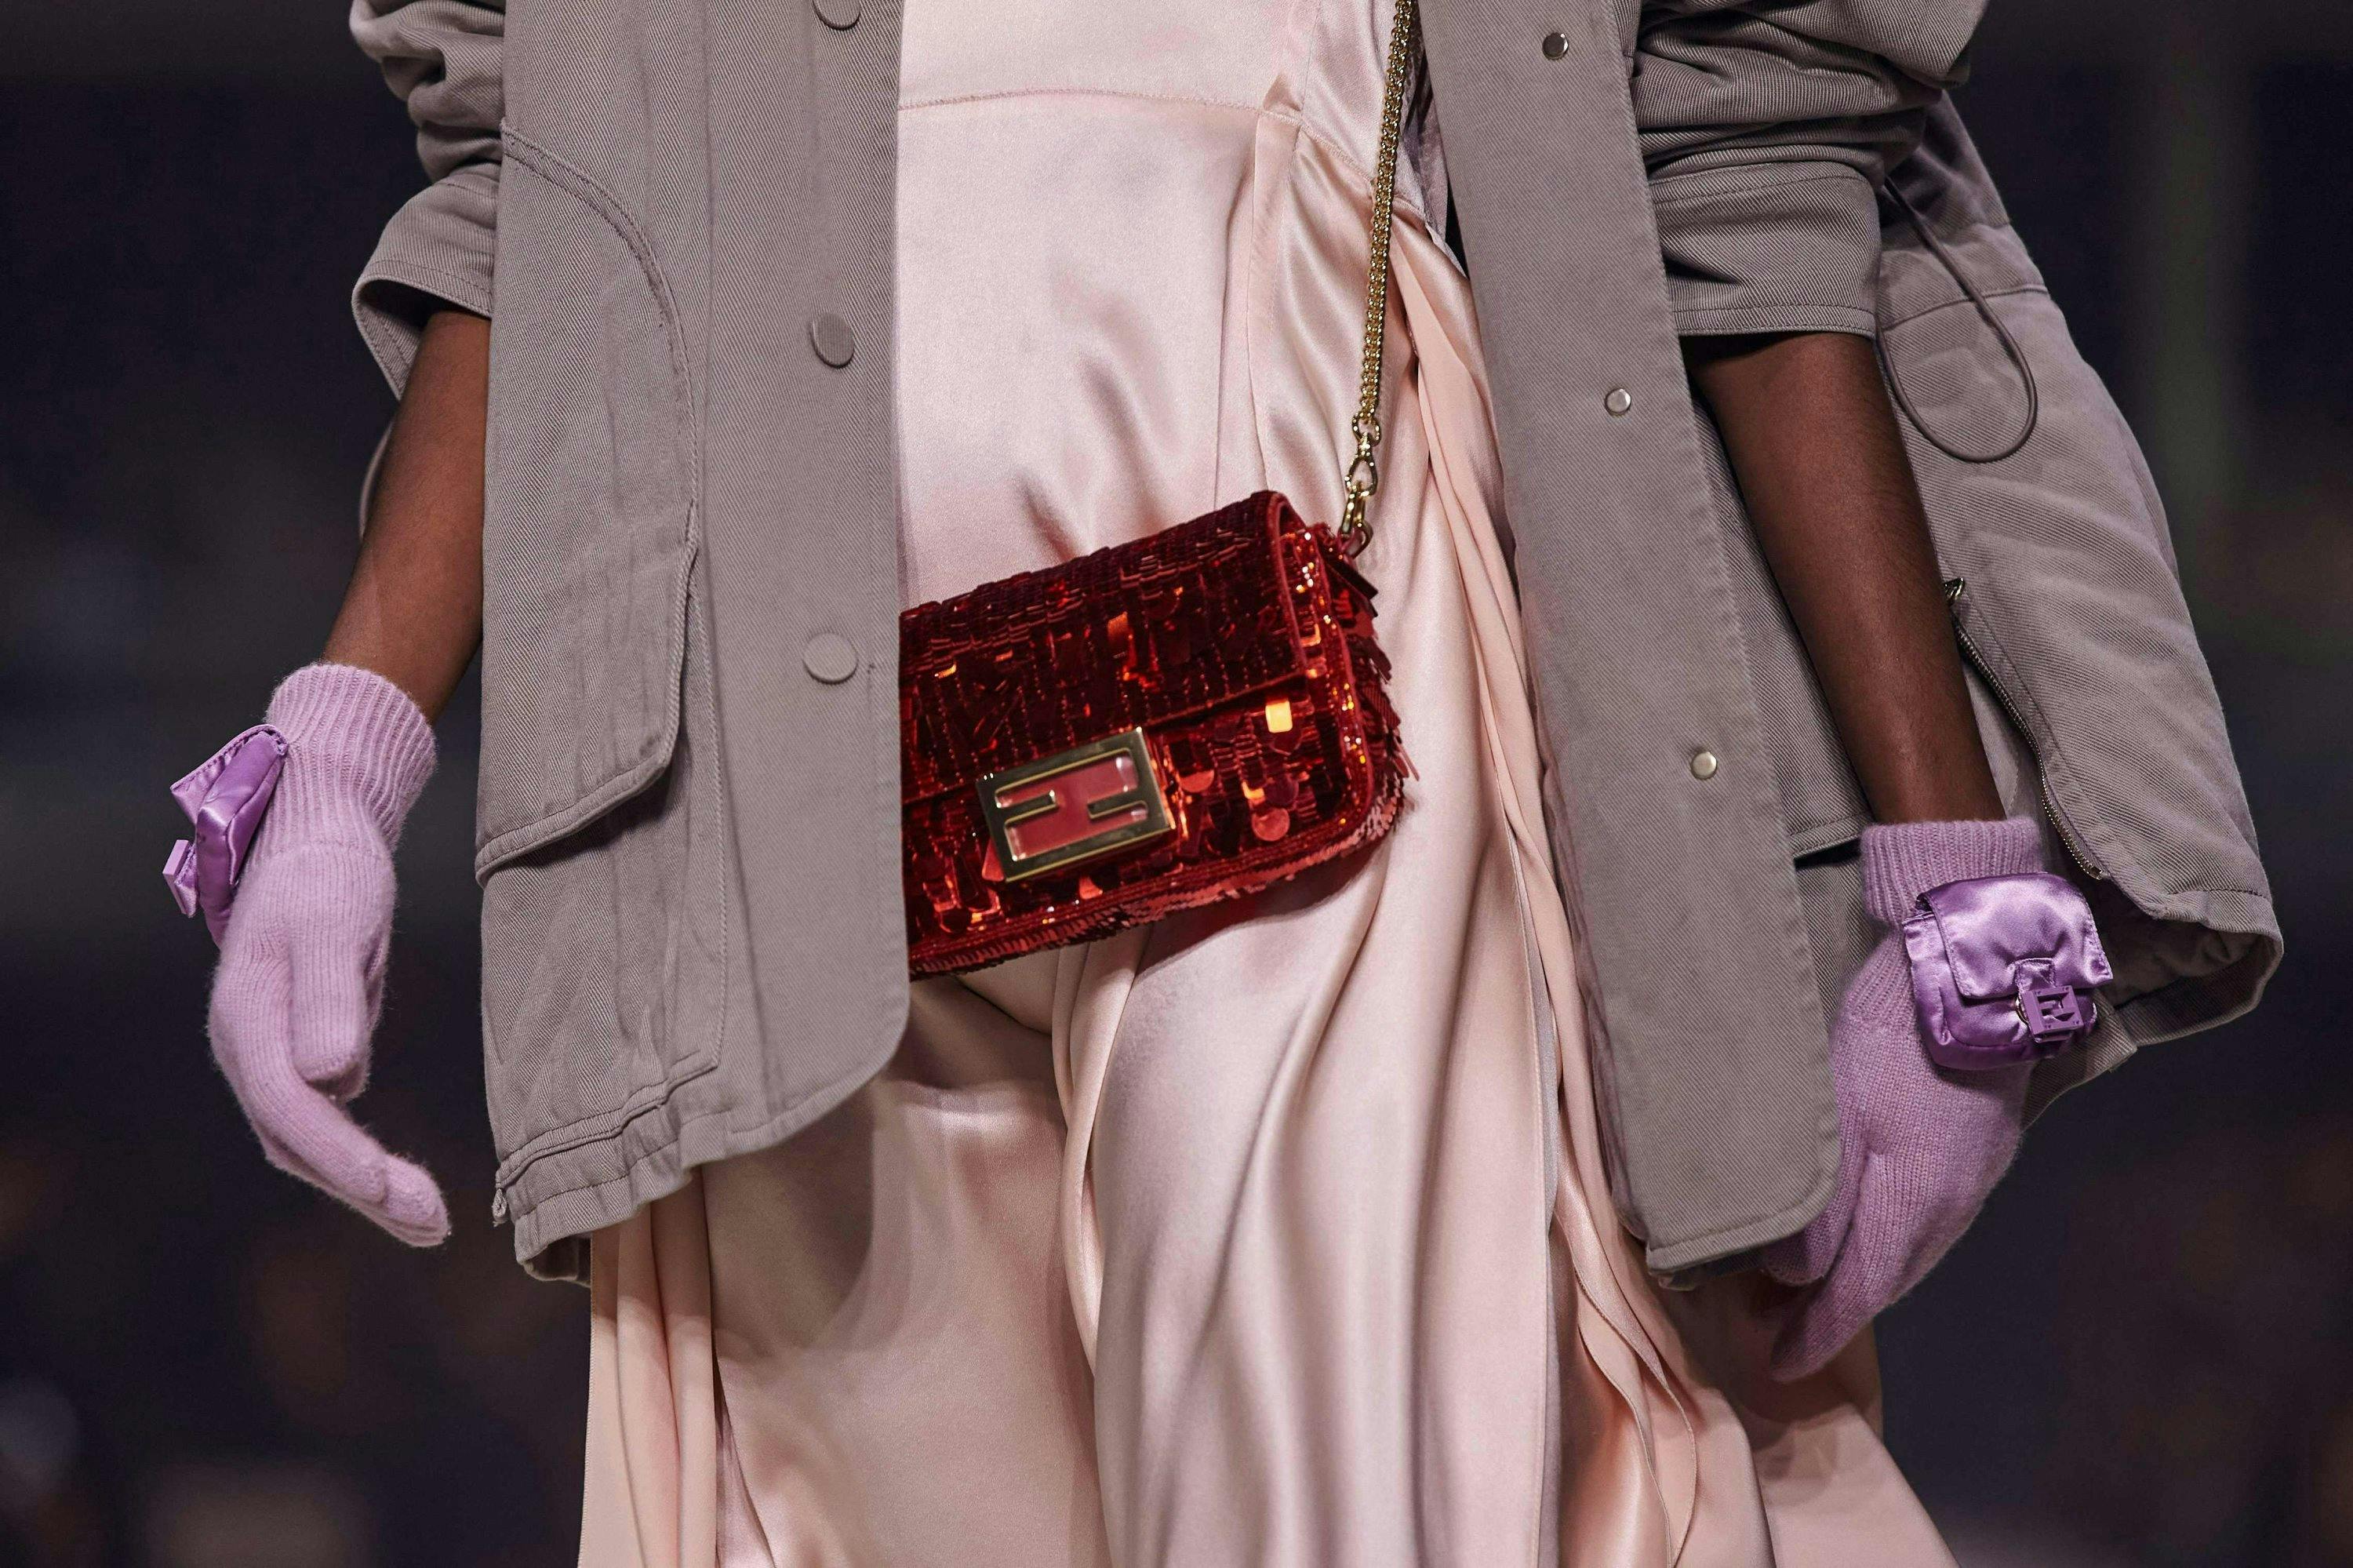 clothing apparel sleeve handbag accessories bag accessory person human